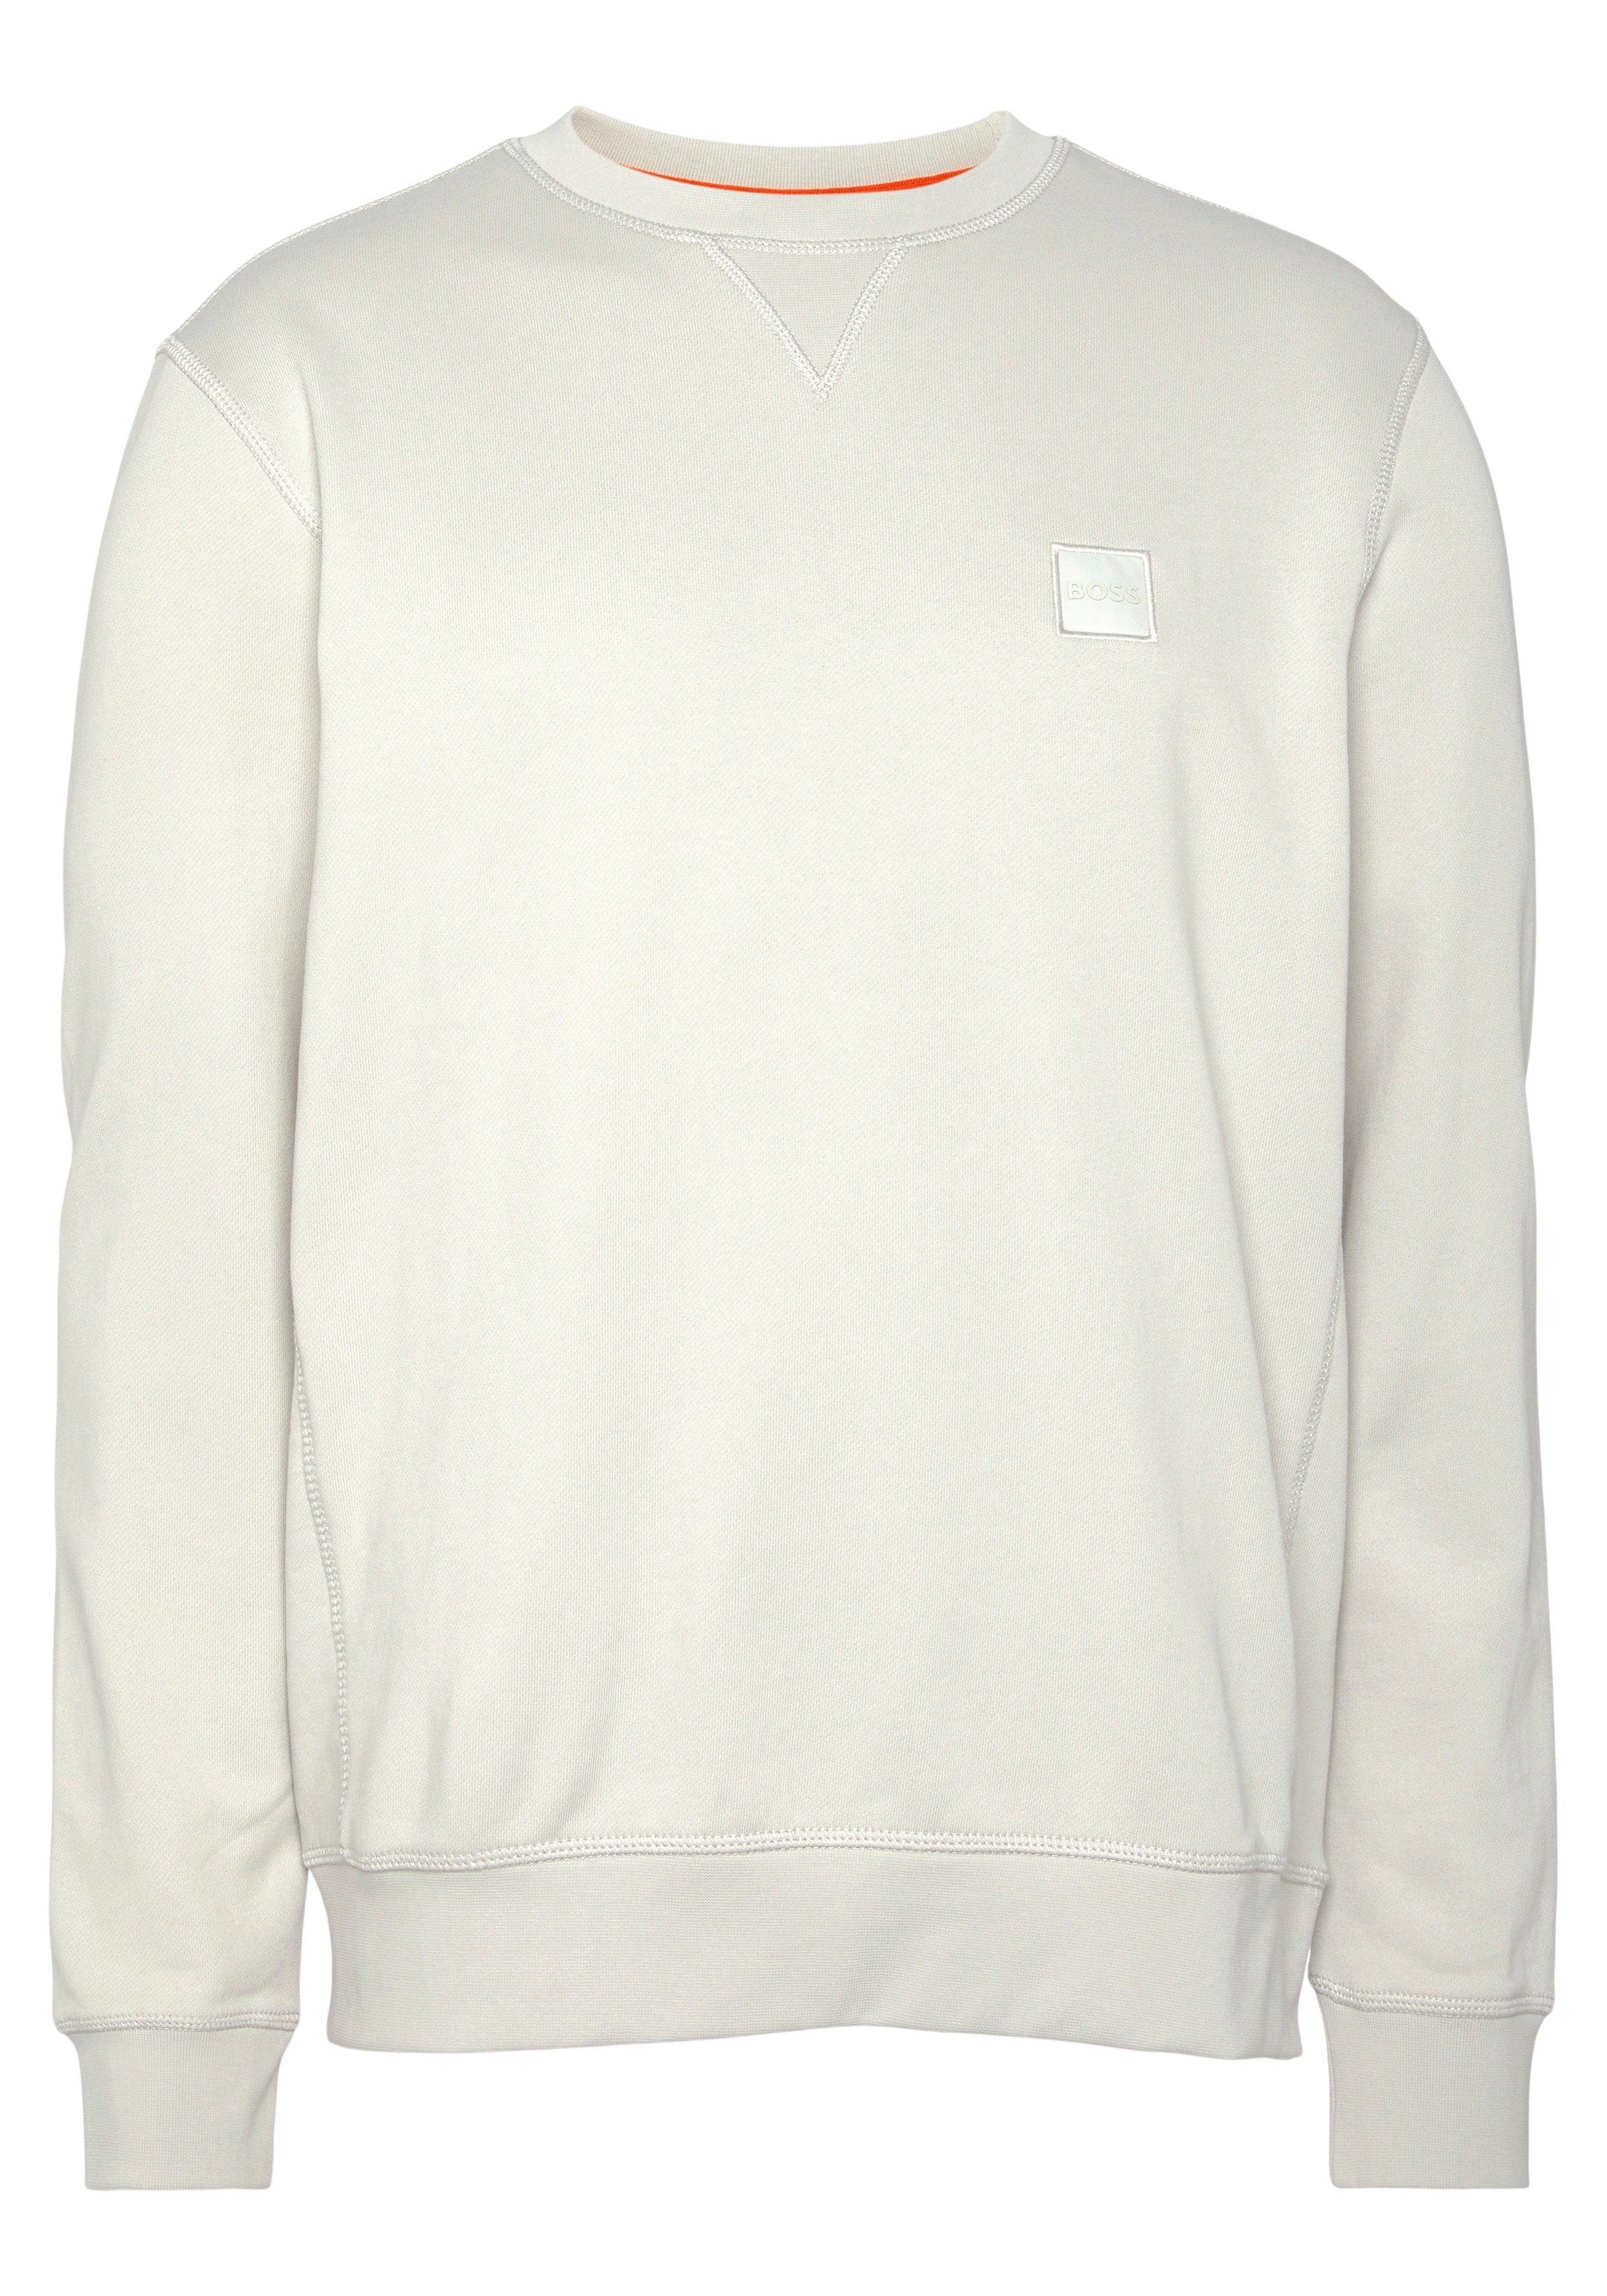 BOSS ORANGE Logo Grey057 Sweatshirt Westart mit Light/Pastel aufgesticktem BOSS